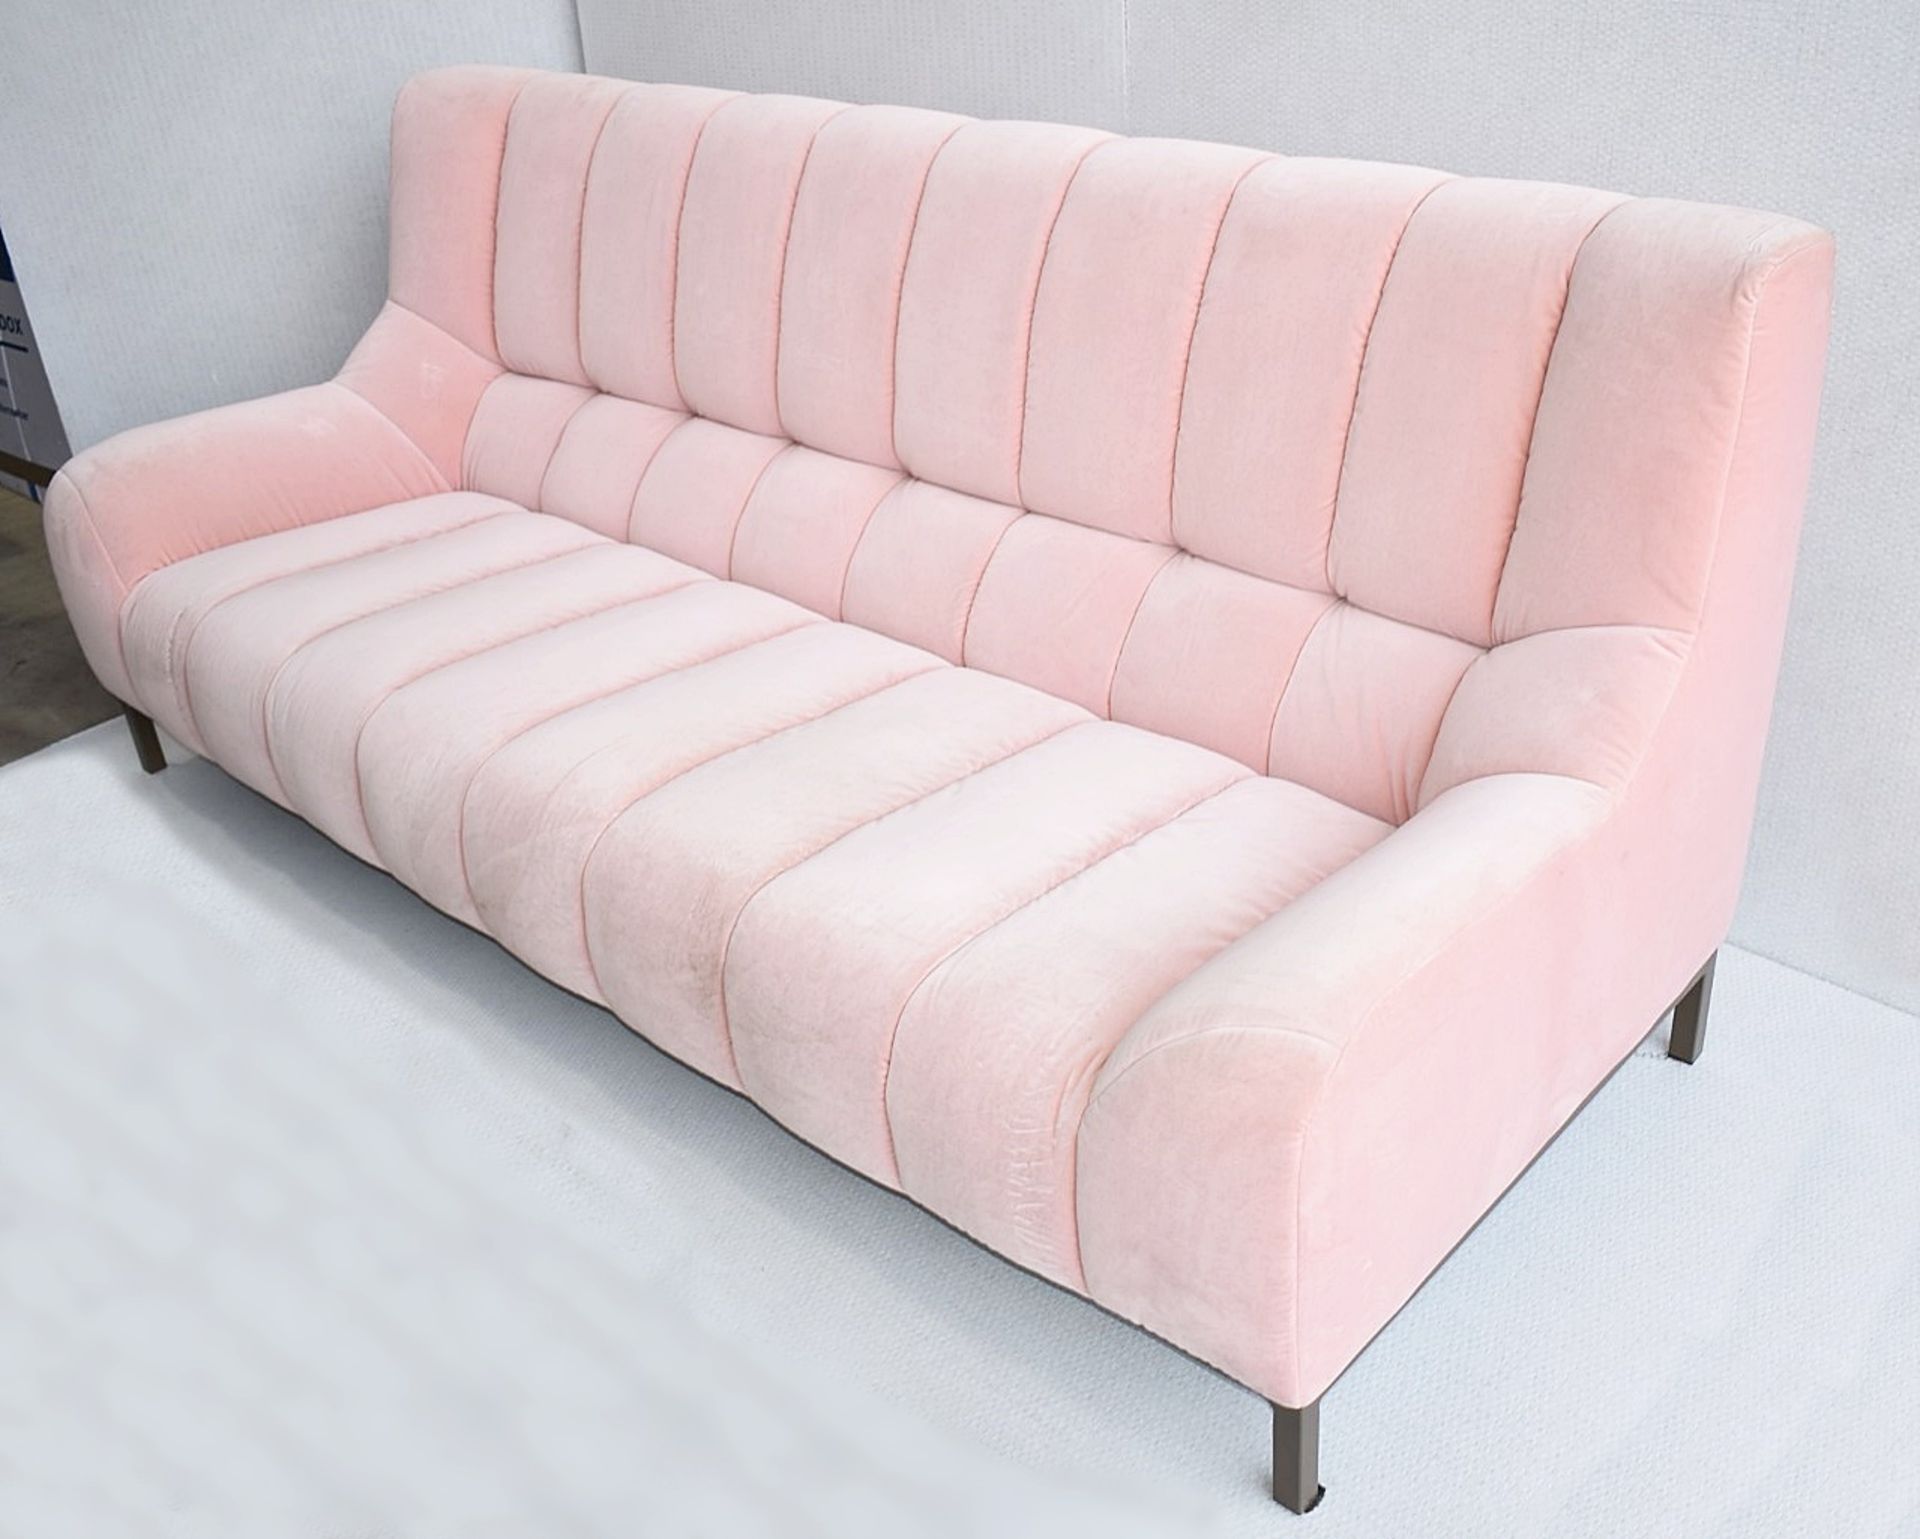 1 x LIGNE ROSET 'Phileas' Velvet Upholstered Designer 2.2-Metre Sofa, in Pale Pink - RRP £6,244 - Image 5 of 10